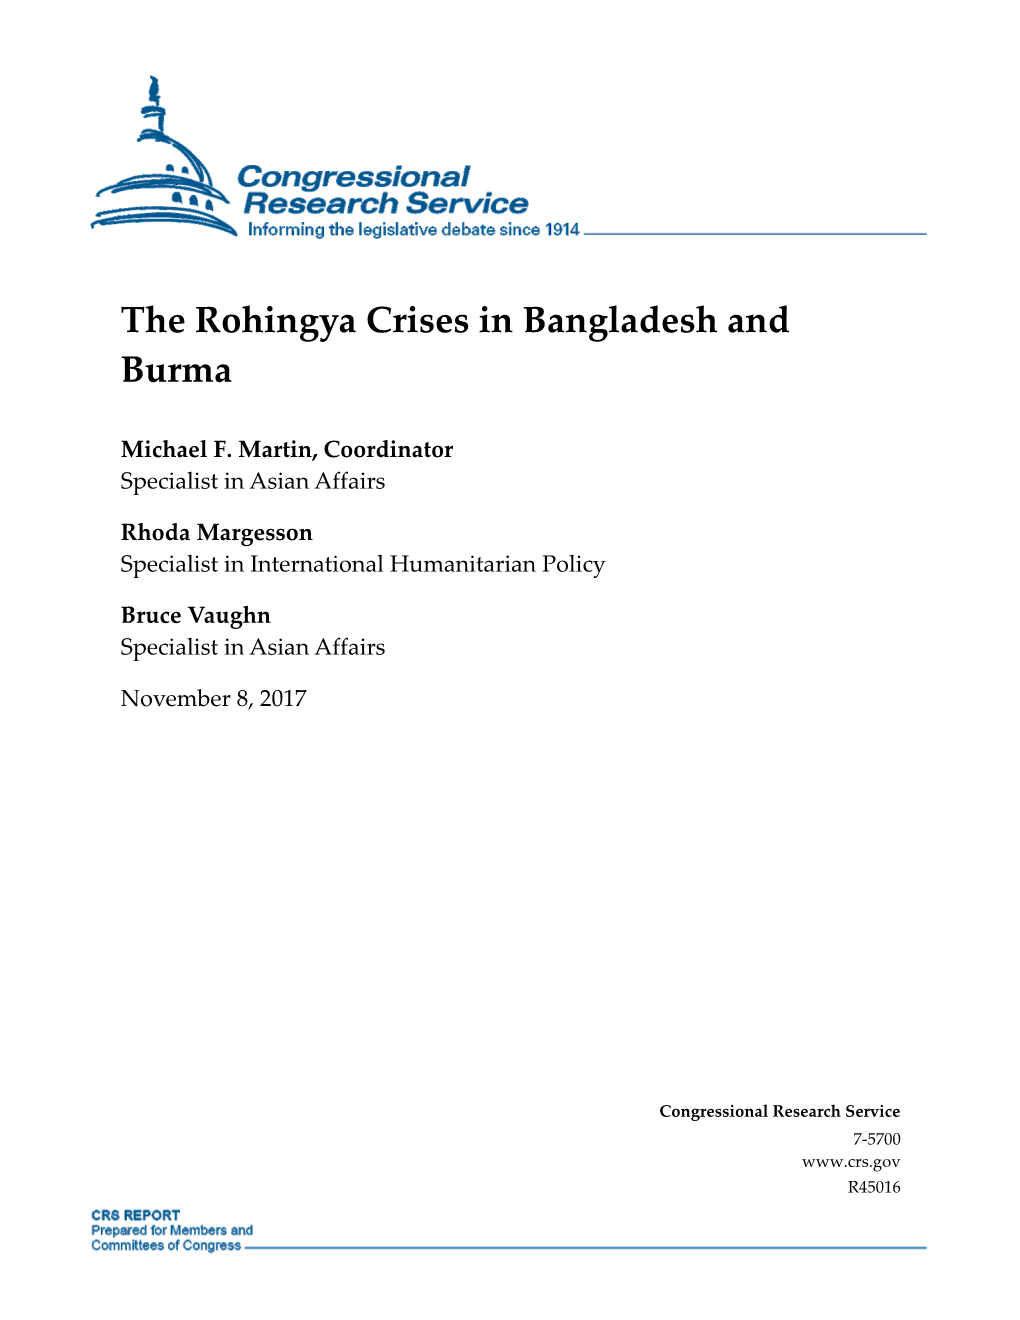 The Rohingya Crises in Bangladesh and Burma